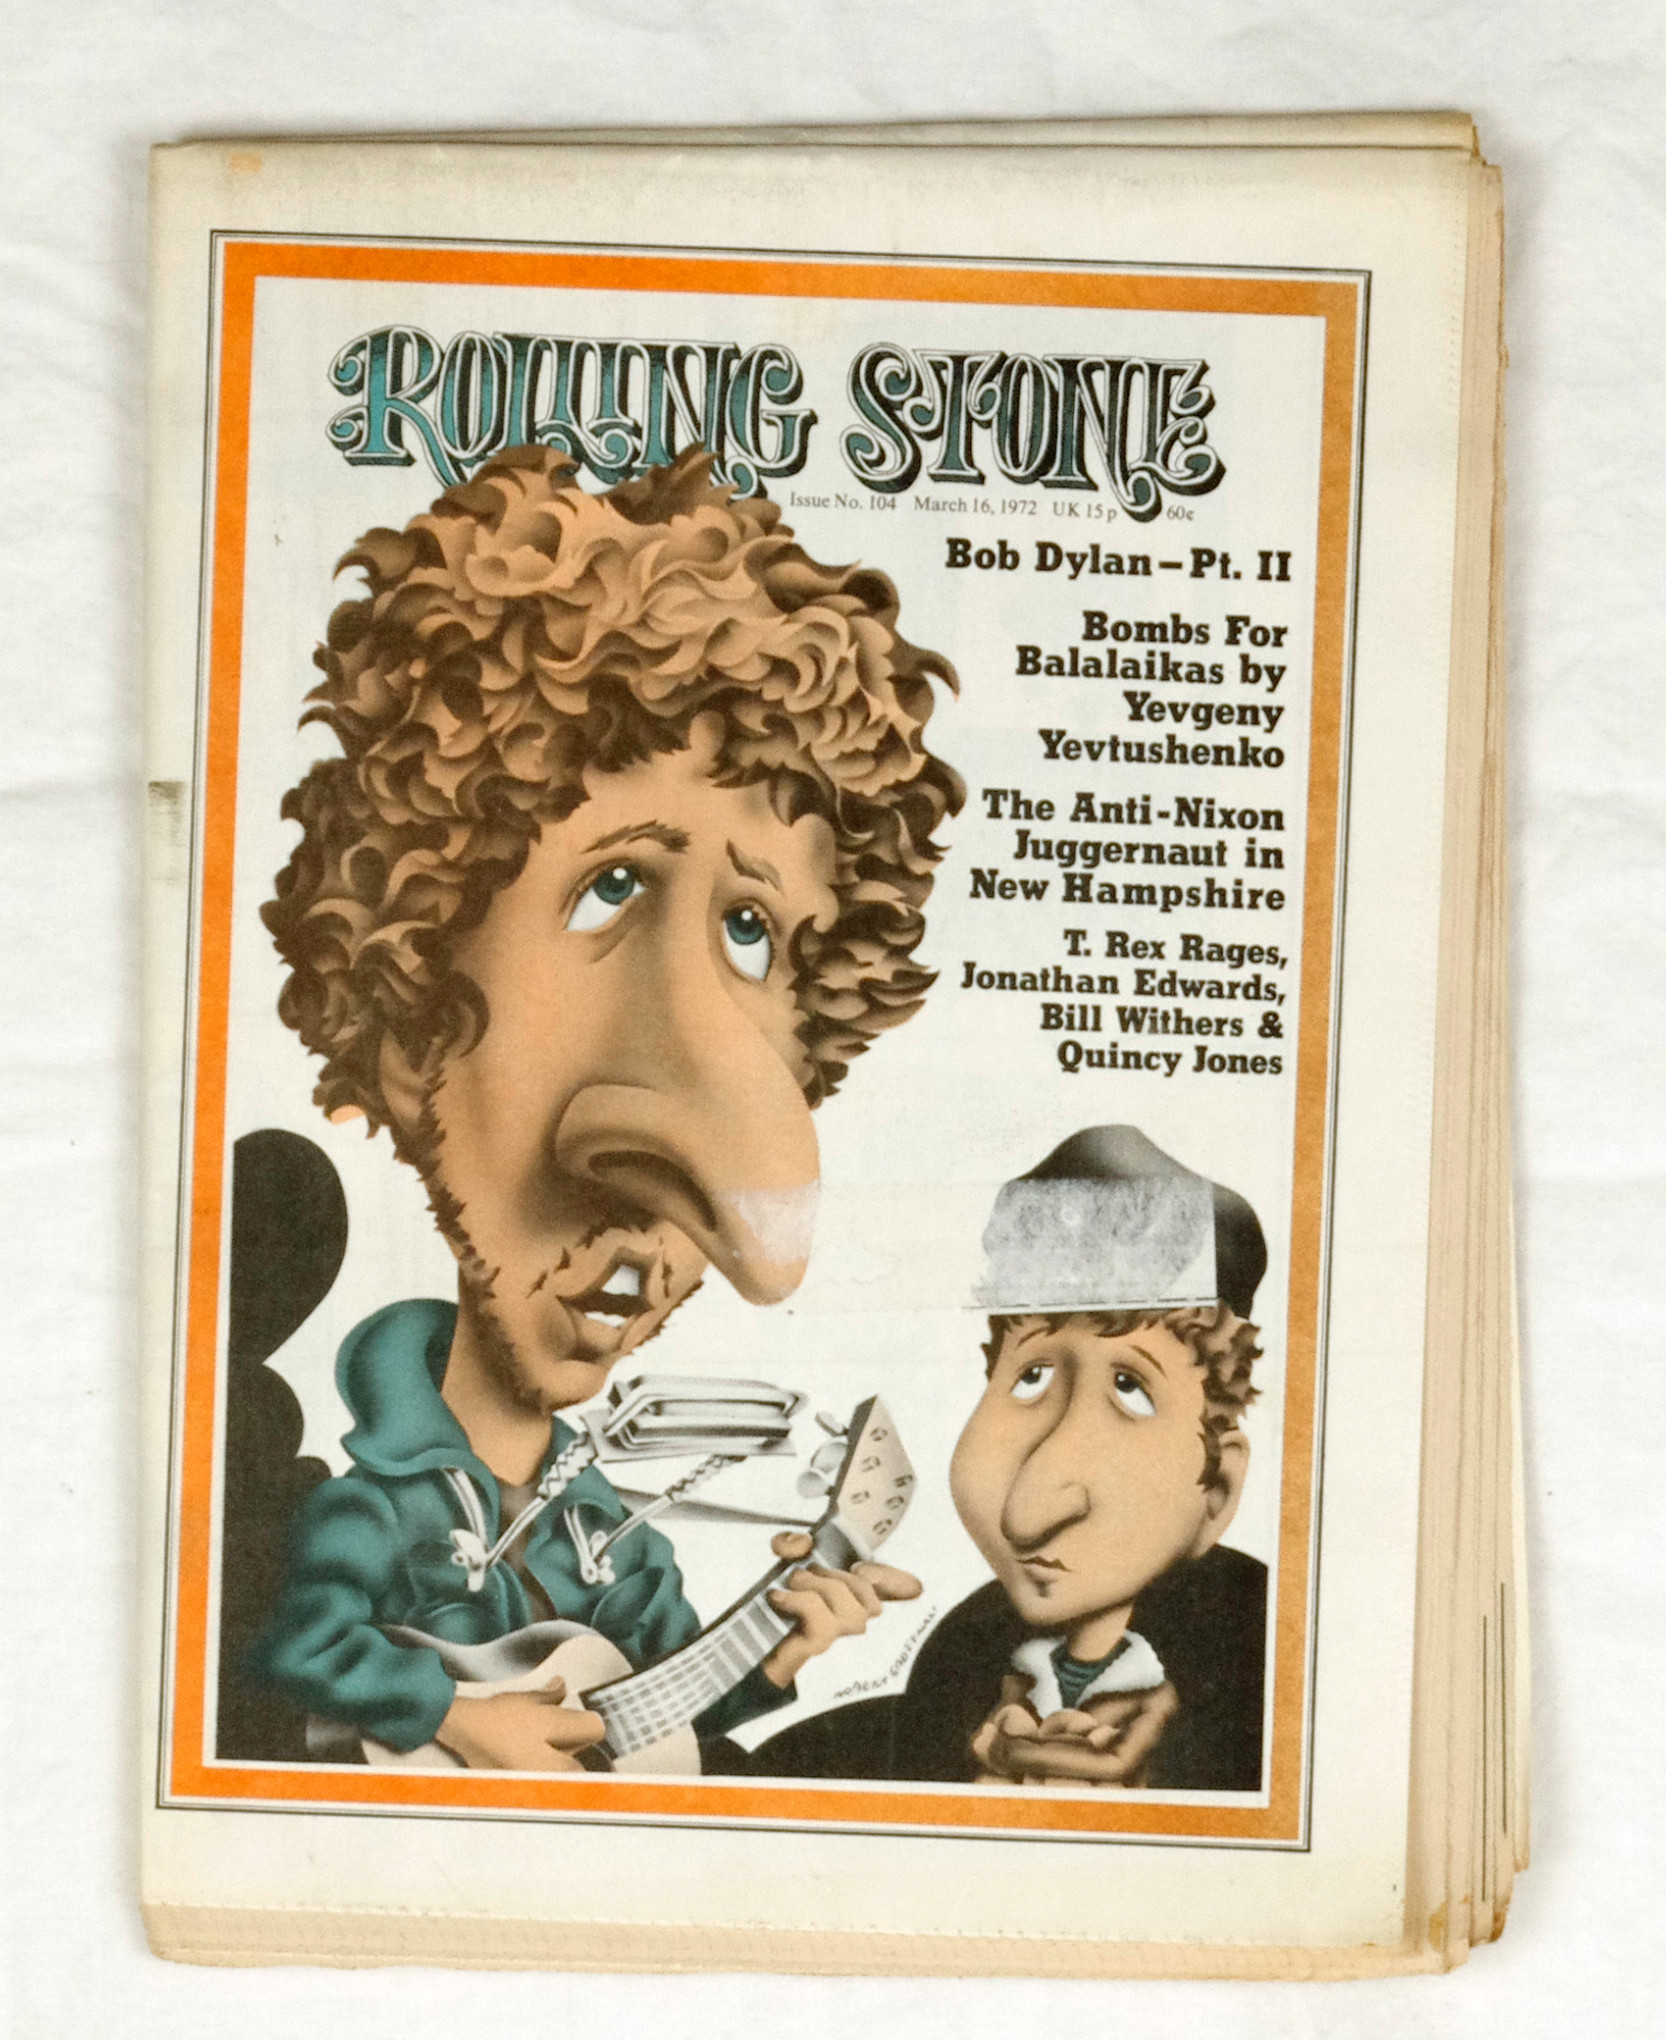 Rolling Stone Magazine Back Issue 1972 Mar 16 No.104 Bob Dylan Pt. II 